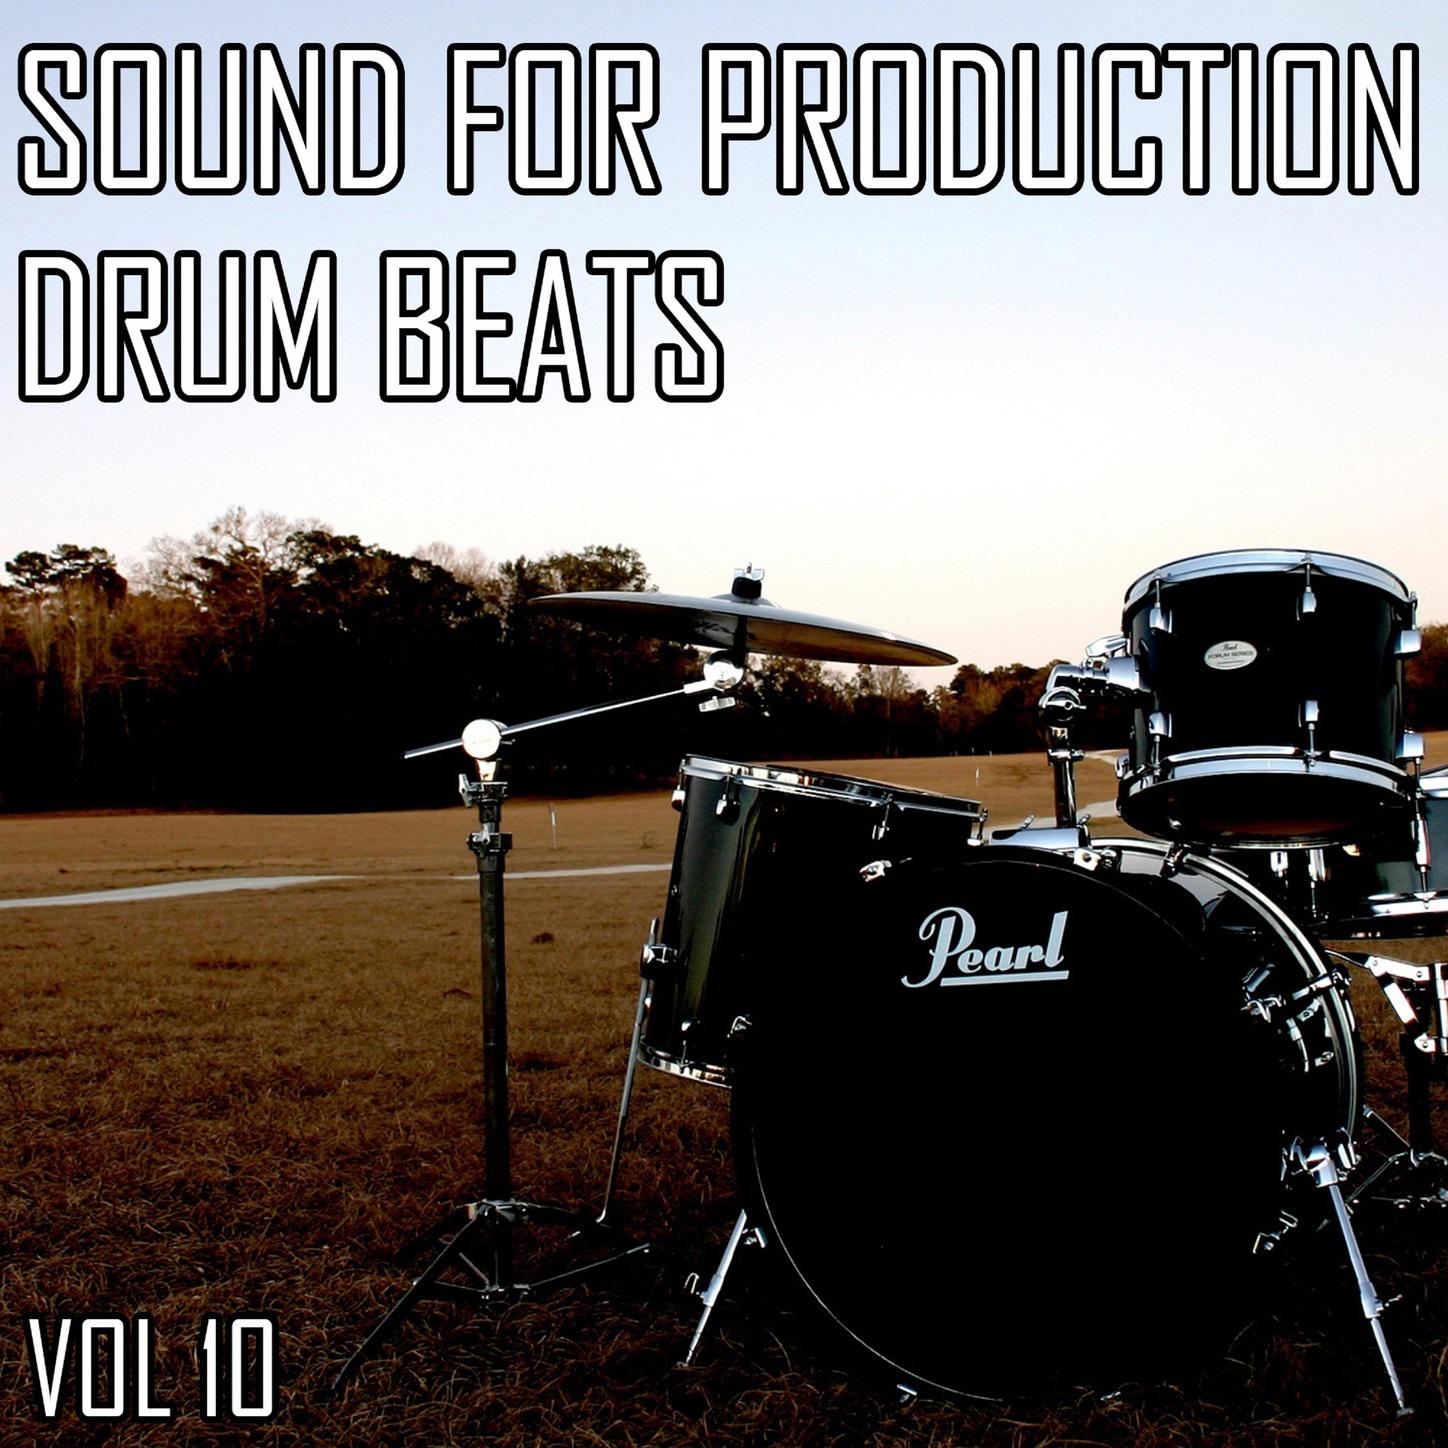 Sound For Production Drum Beats, Vol. 10